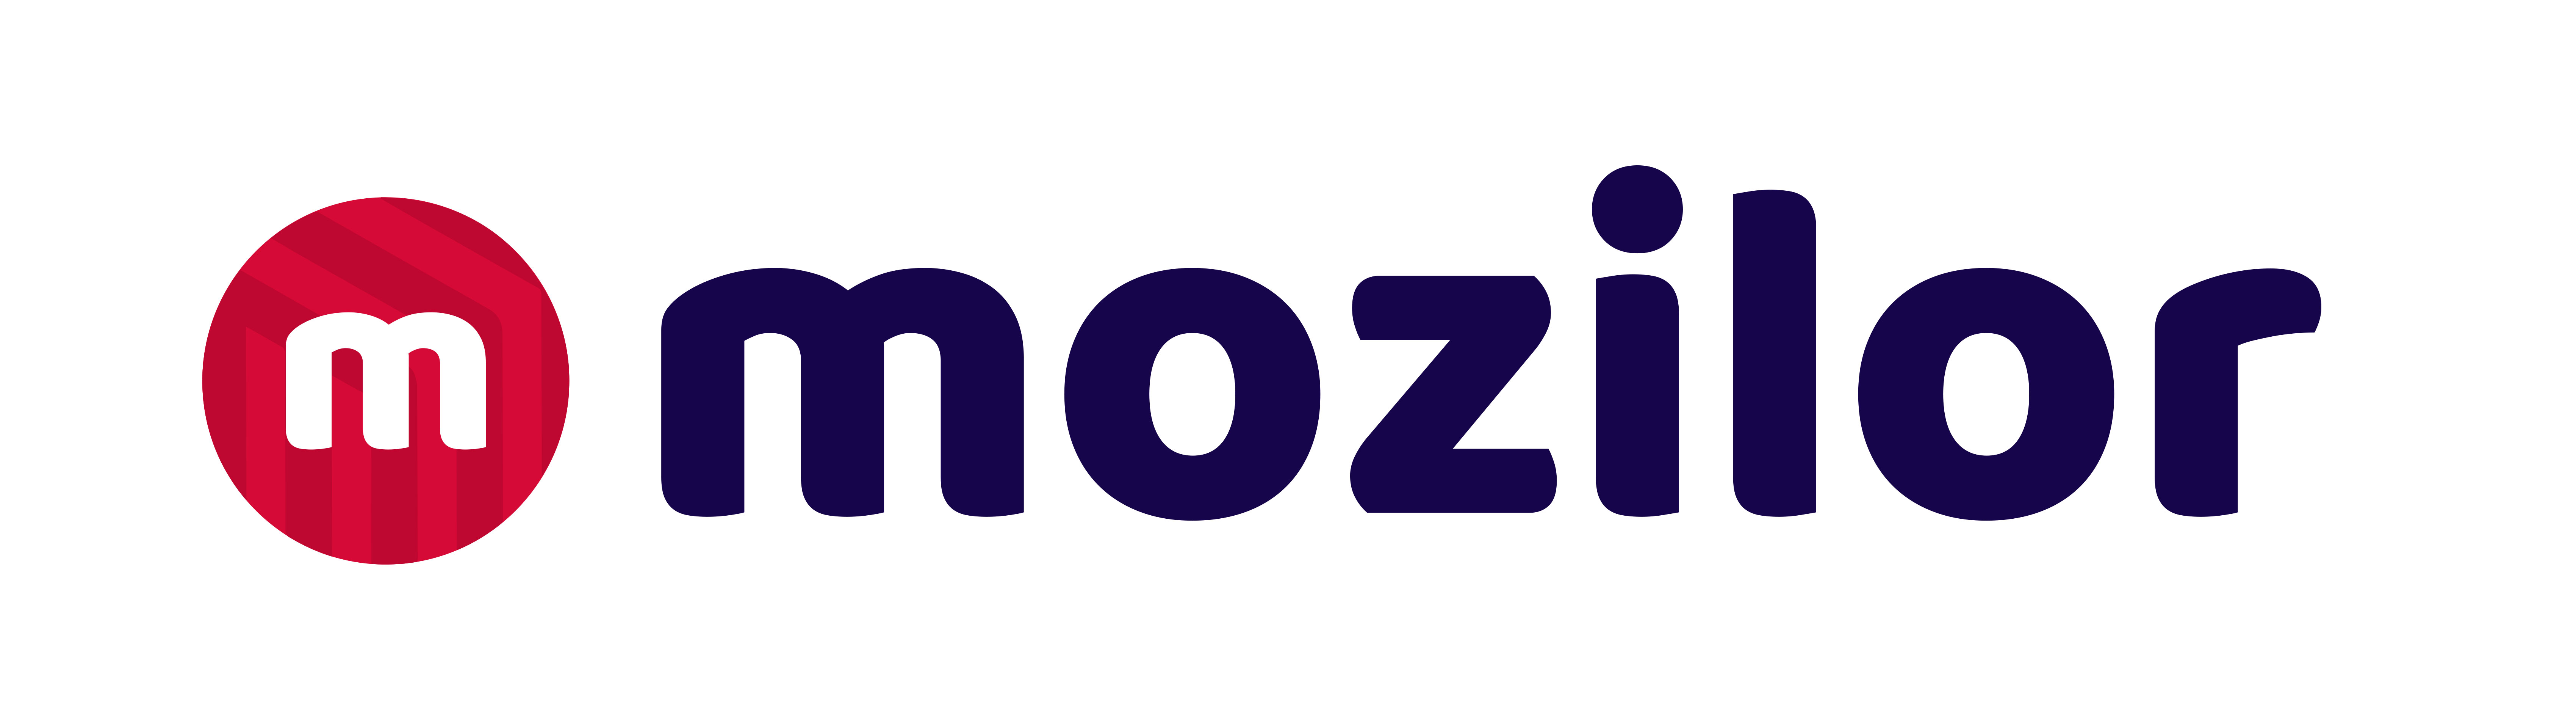 Mozilor_logo